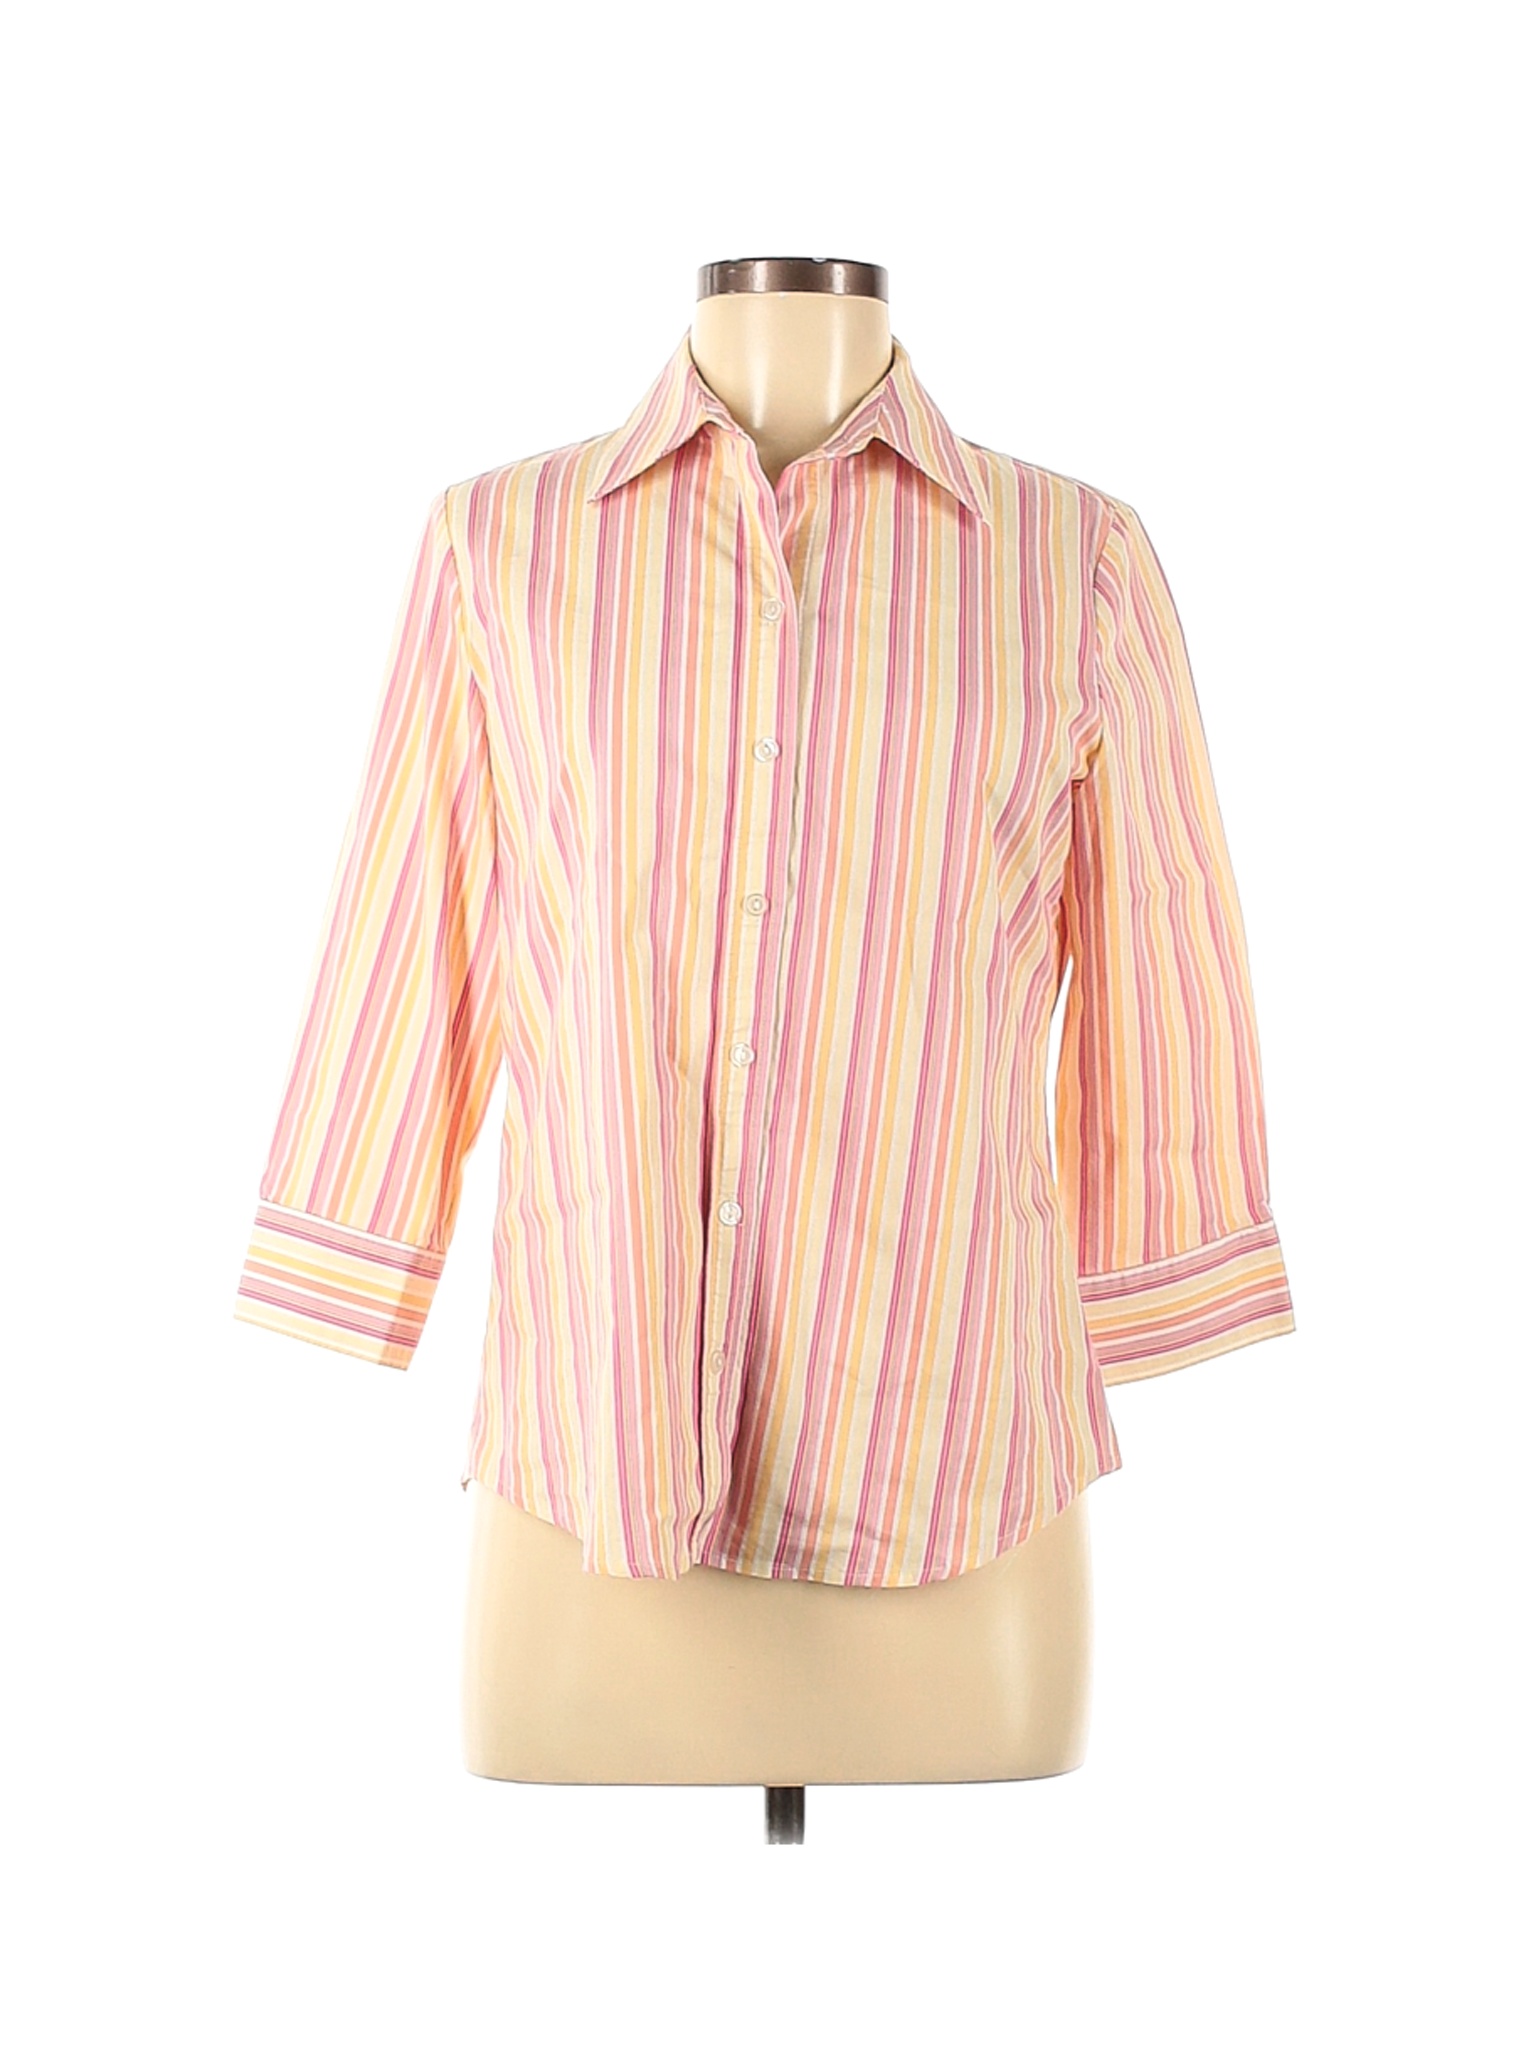 Chico's Women Pink 3/4 Sleeve Button-Down Shirt M | eBay